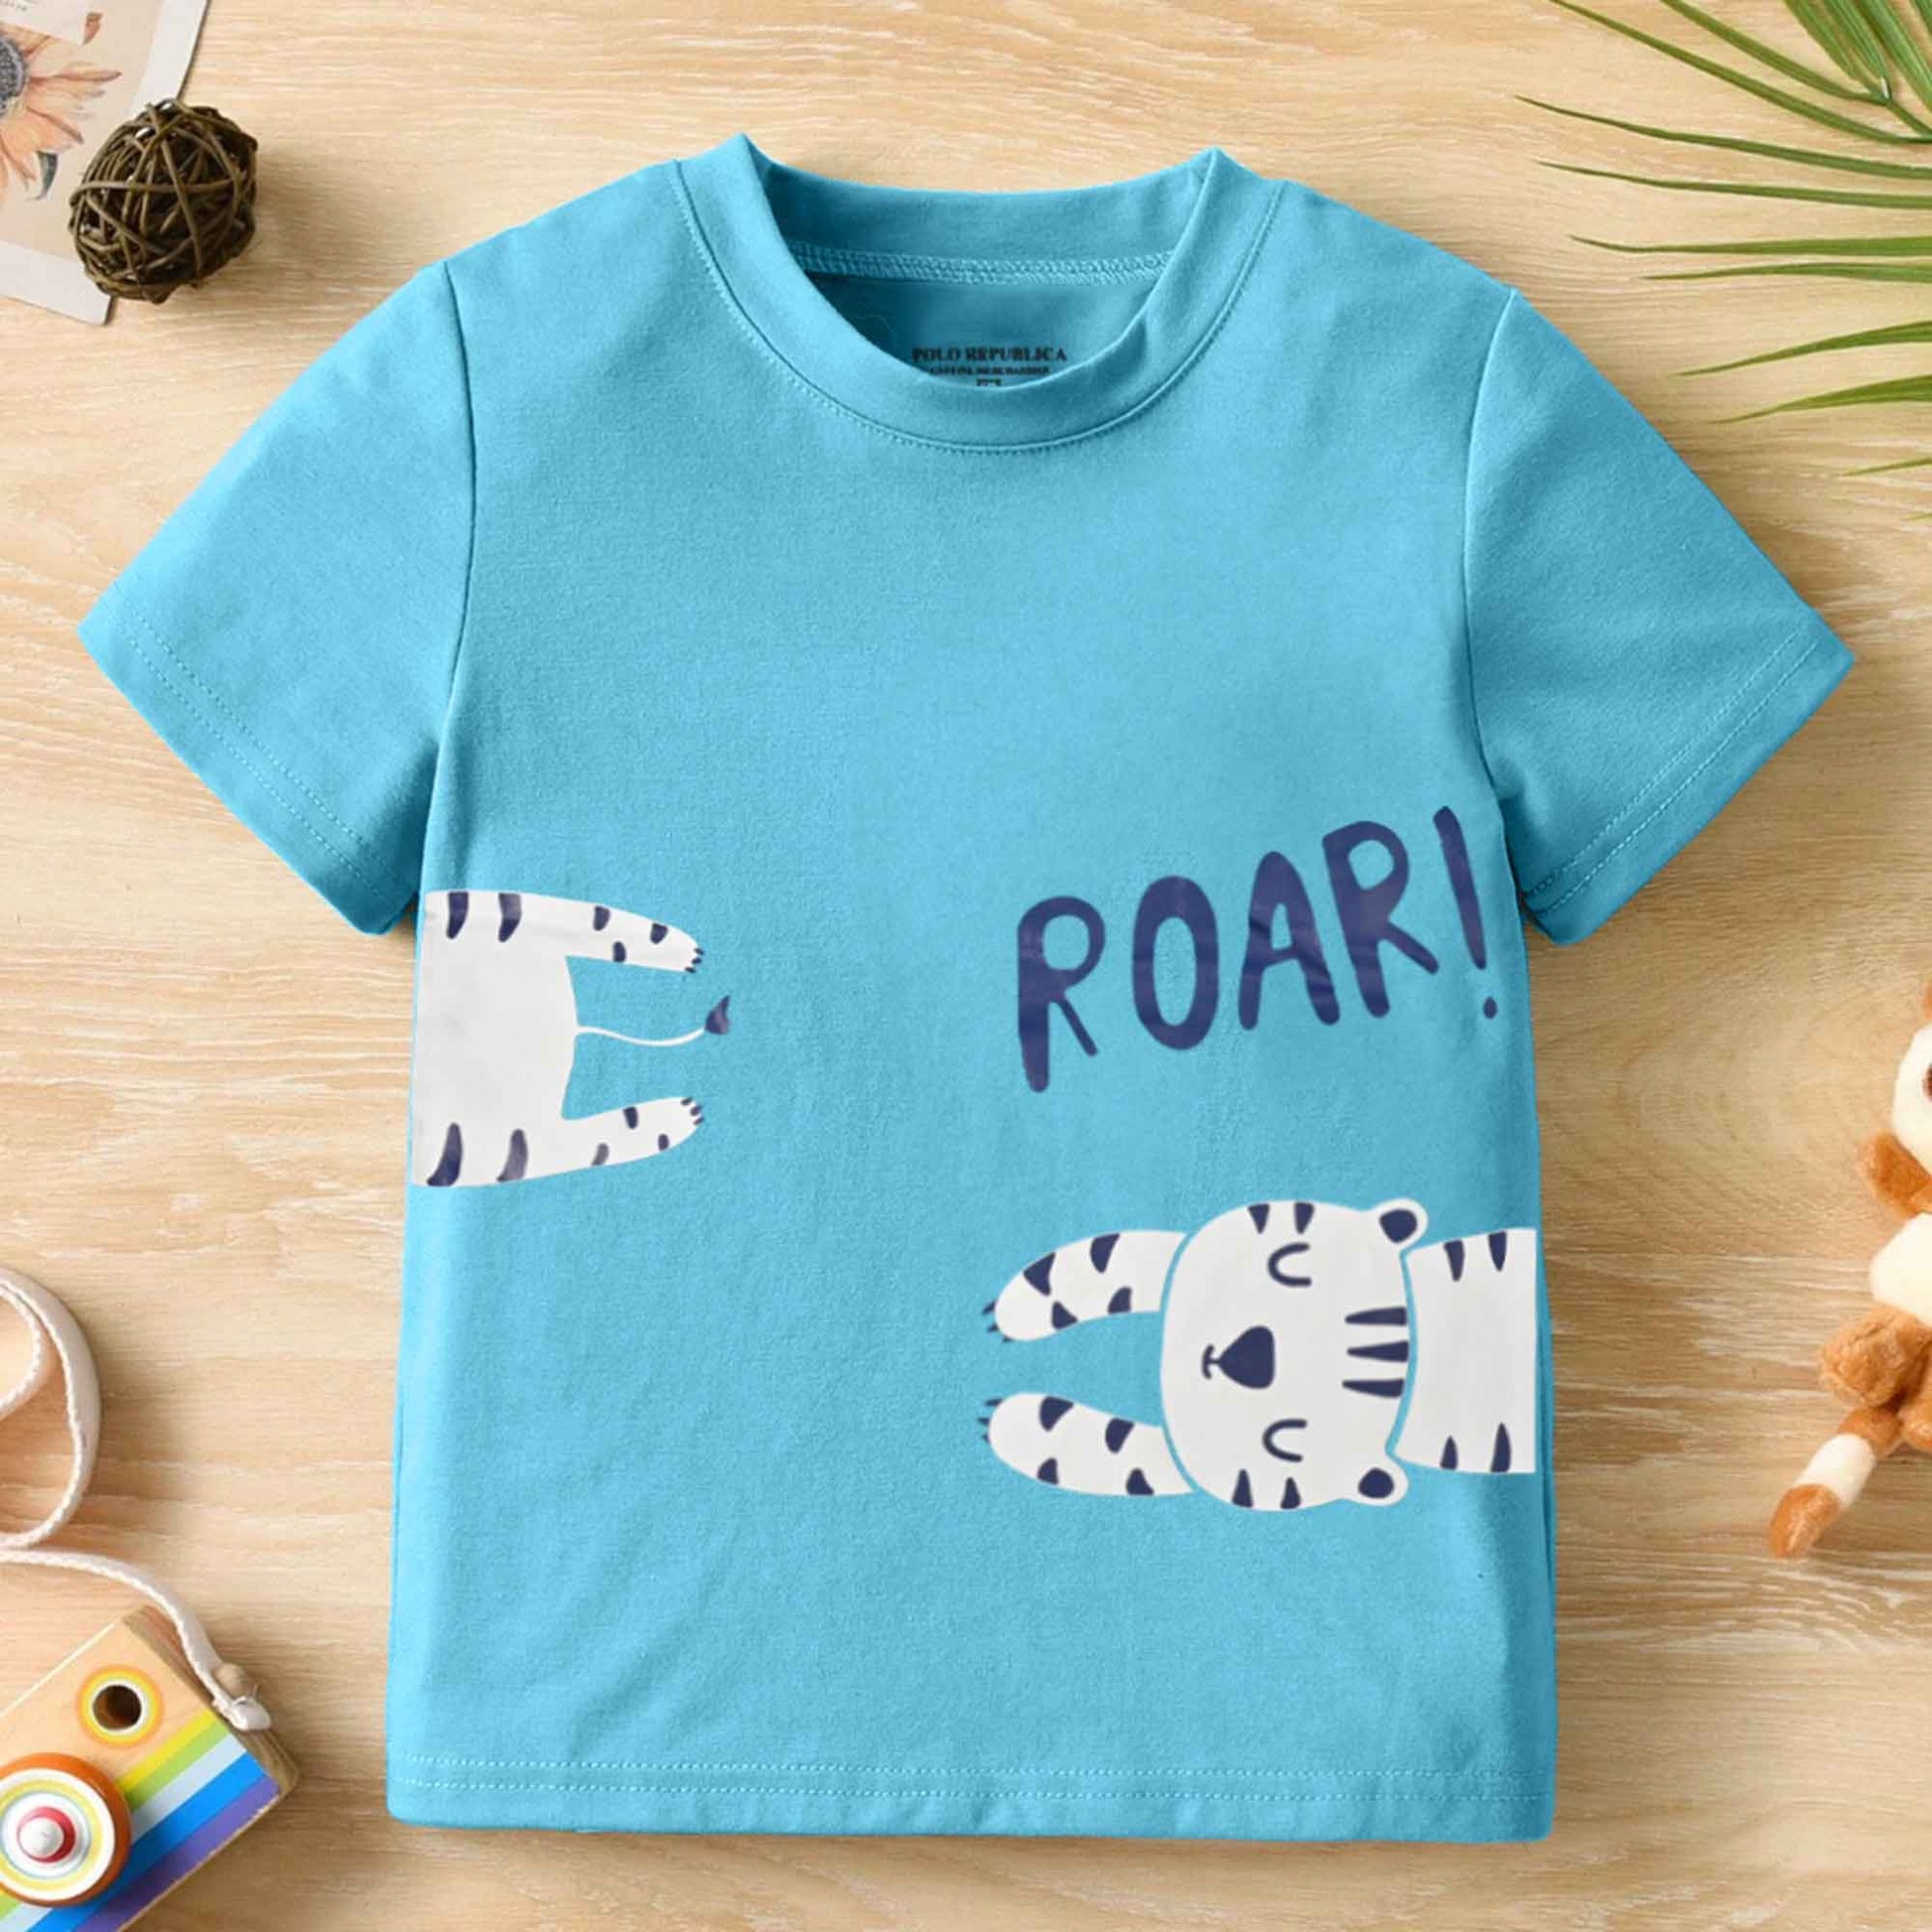 Polo Republica Boy's Roar Printed Tee Shirt Boy's Tee Shirt Polo Republica Sky 3-4 Years 